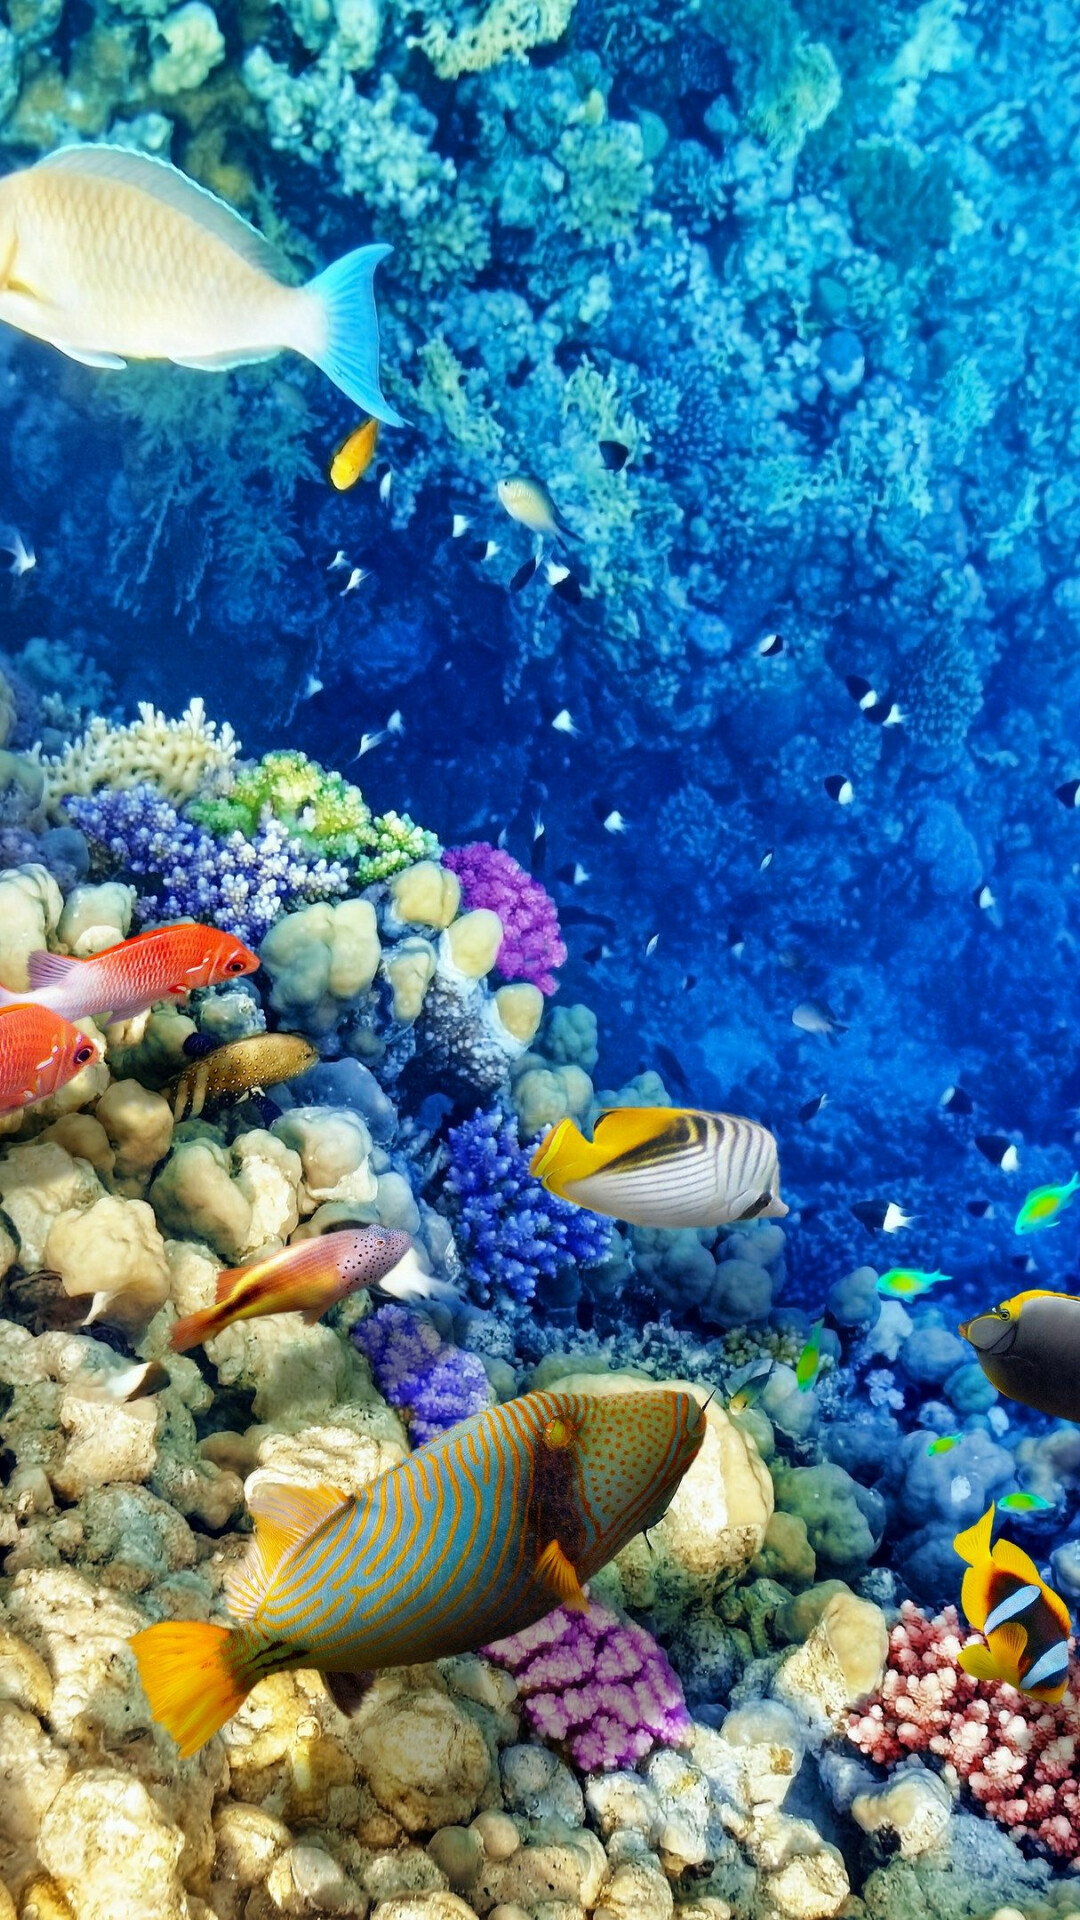 Great Barrier Reef: GBR Marine Park, An extraordinary variety of marine habitats. 1080x1920 Full HD Wallpaper.